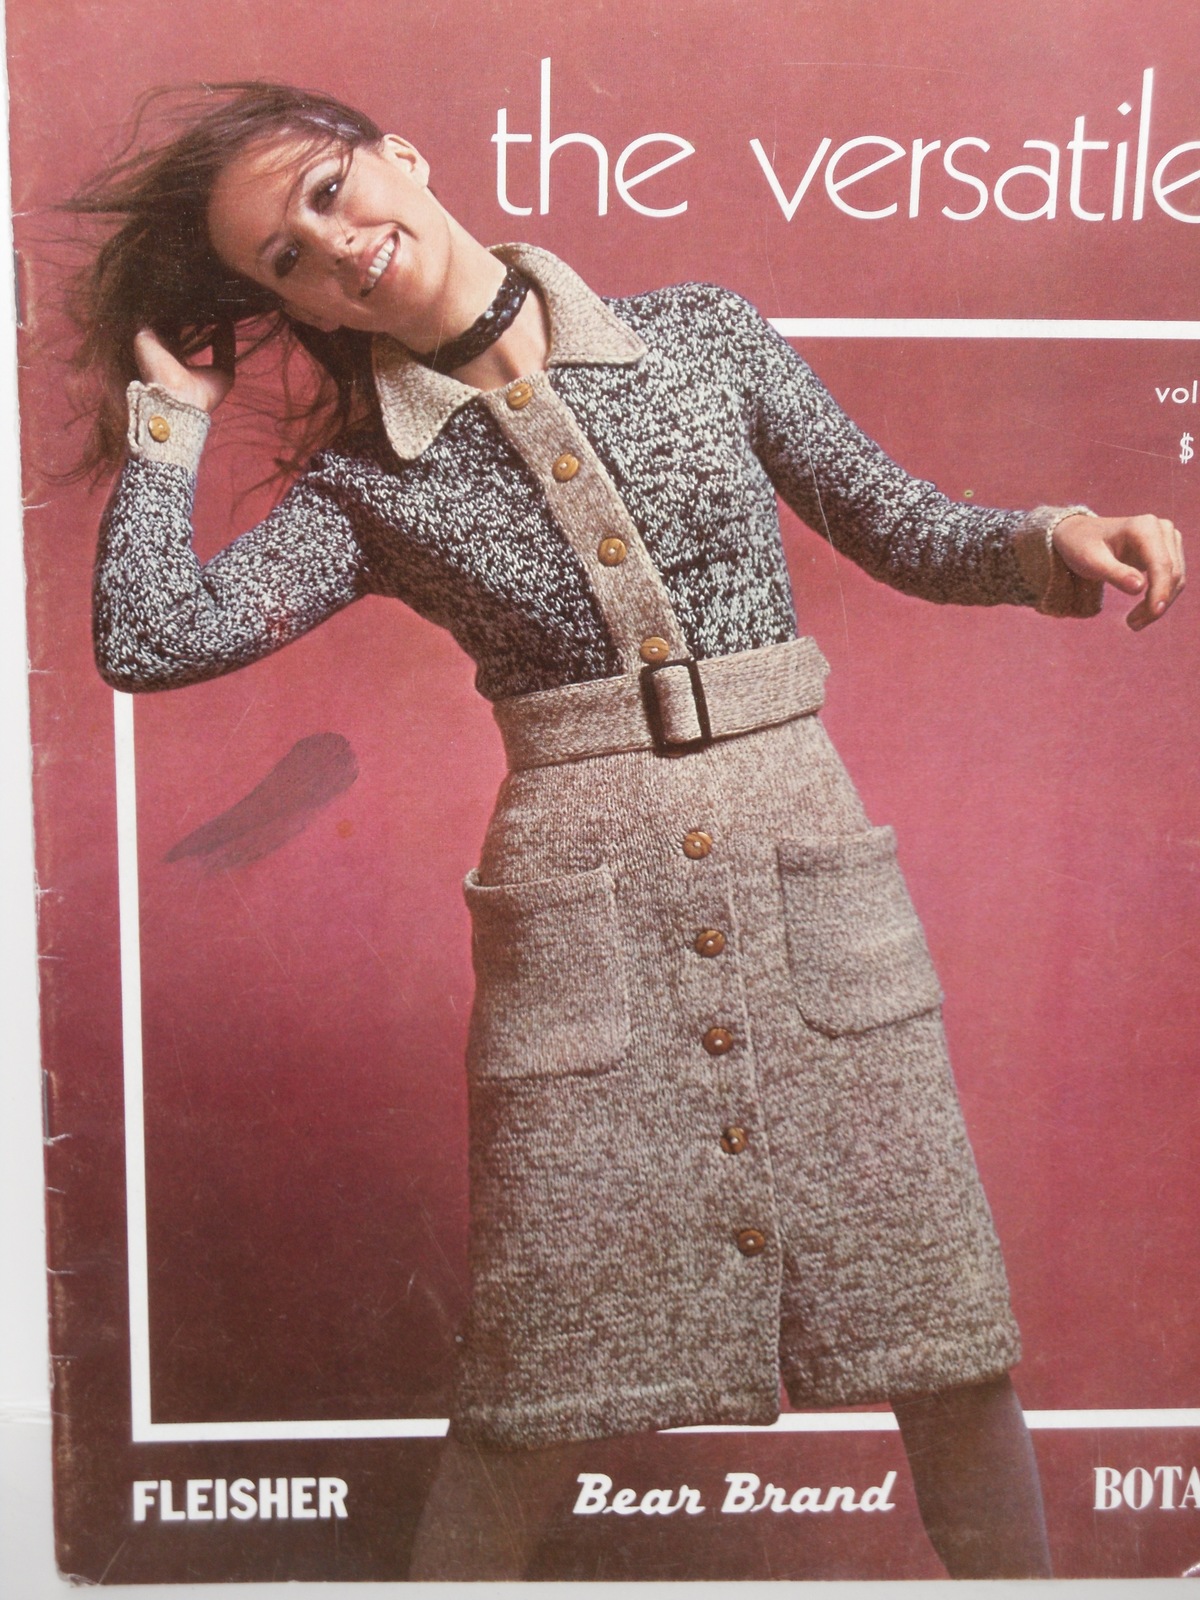 The Versatiles Vol. 453 Crochet & Knitting Fashion Pattern Booklet Vintage - $7.95